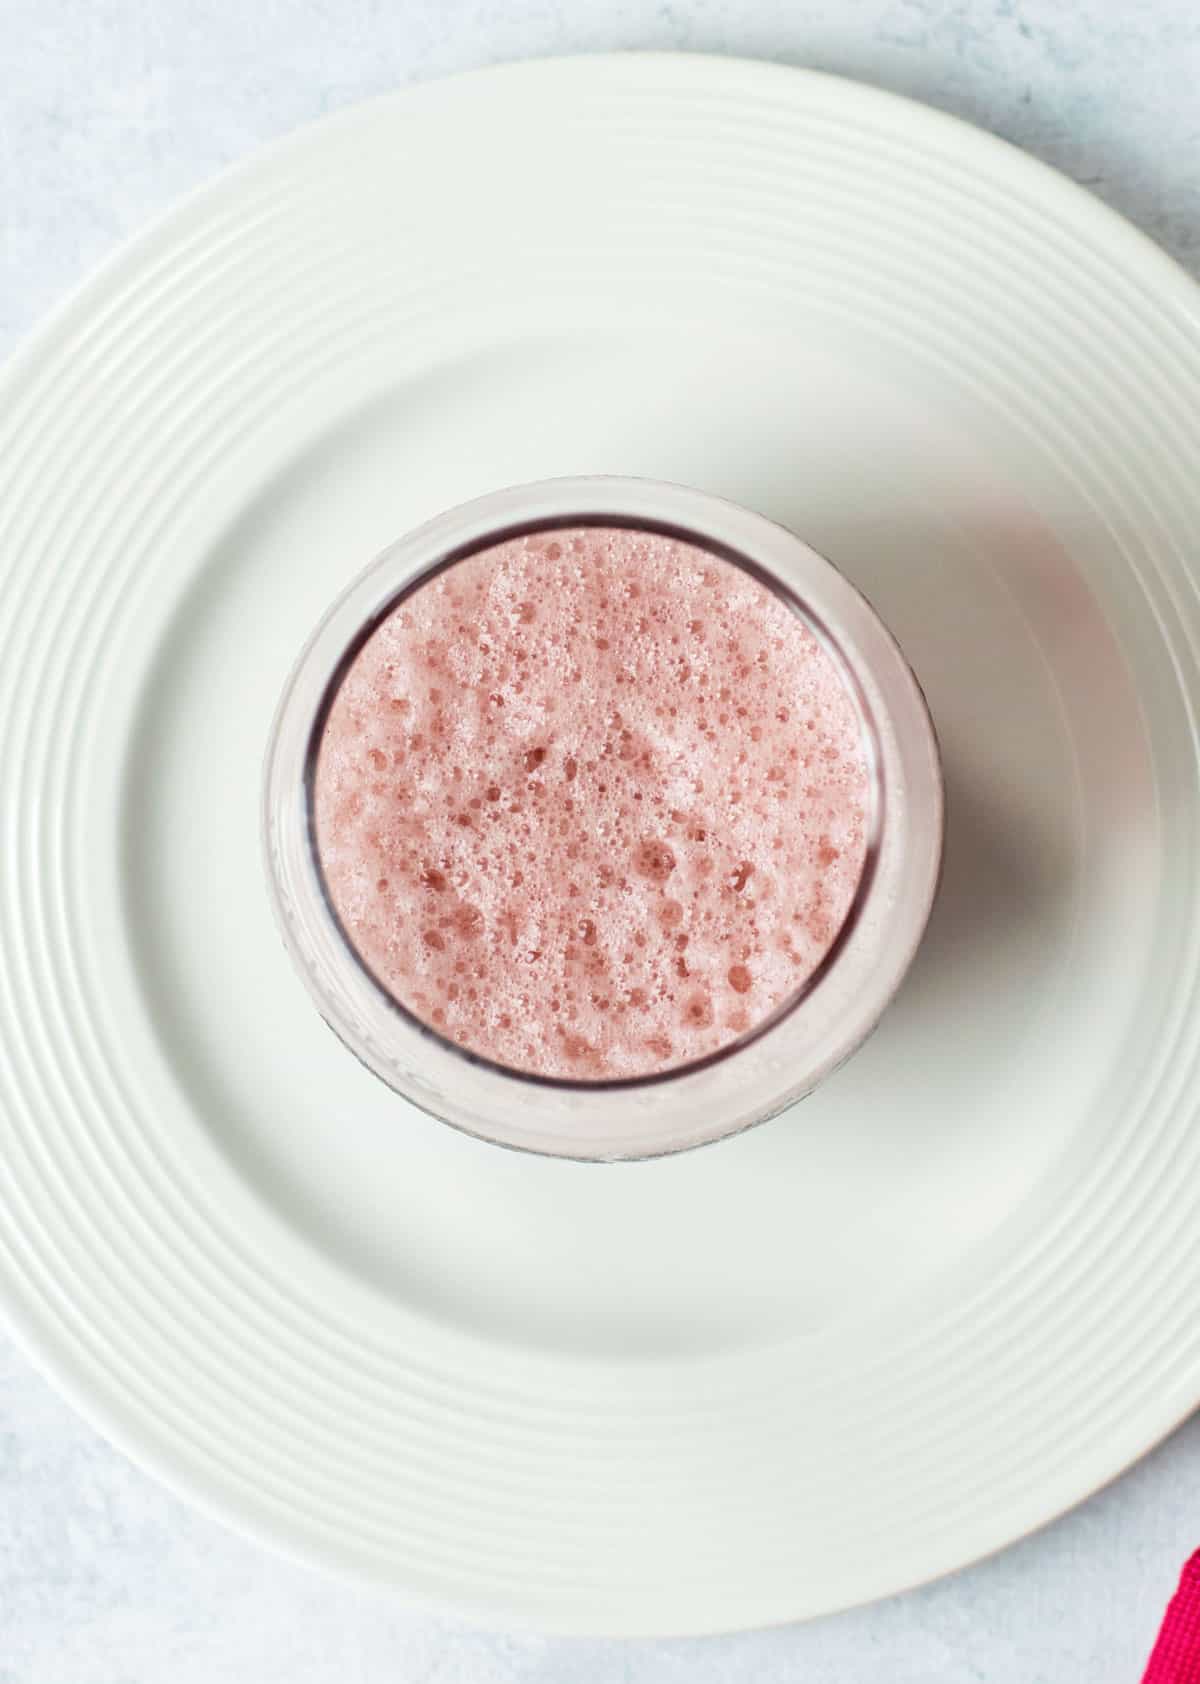 pink foamy drink in glass on white plate